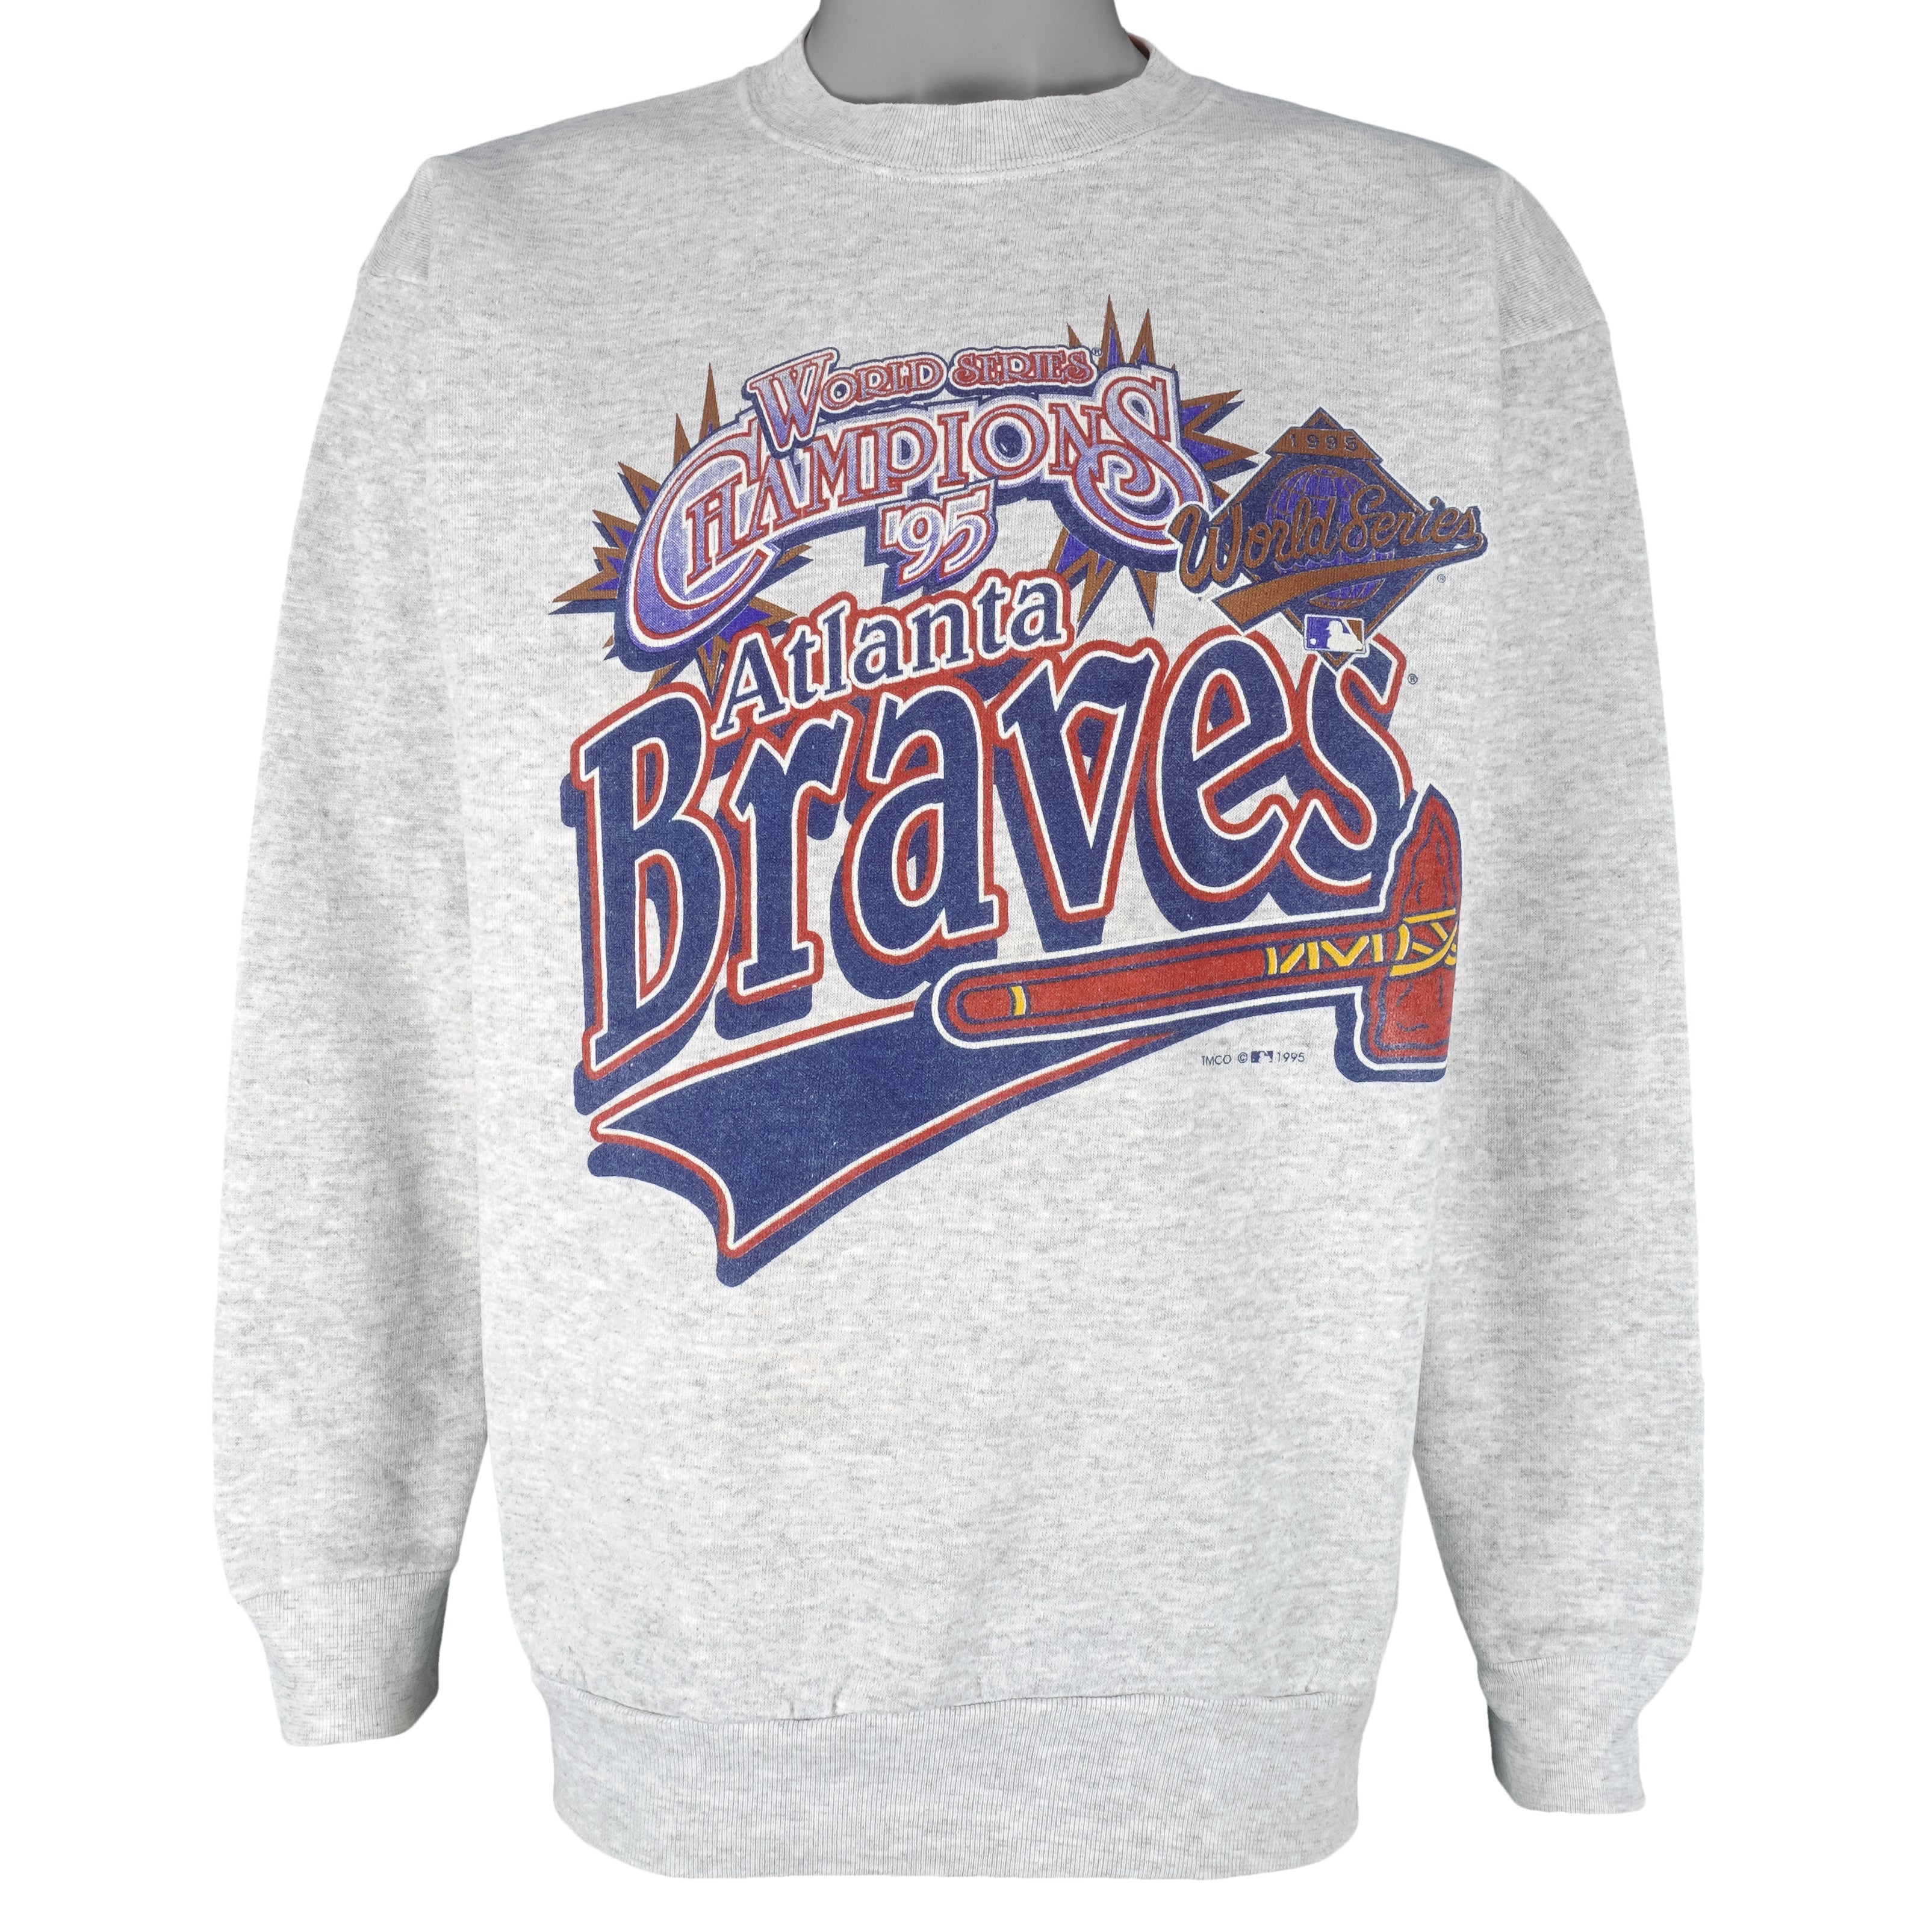 MLB - Atlanta Braves World Champions Sweatshirt 1995 Large